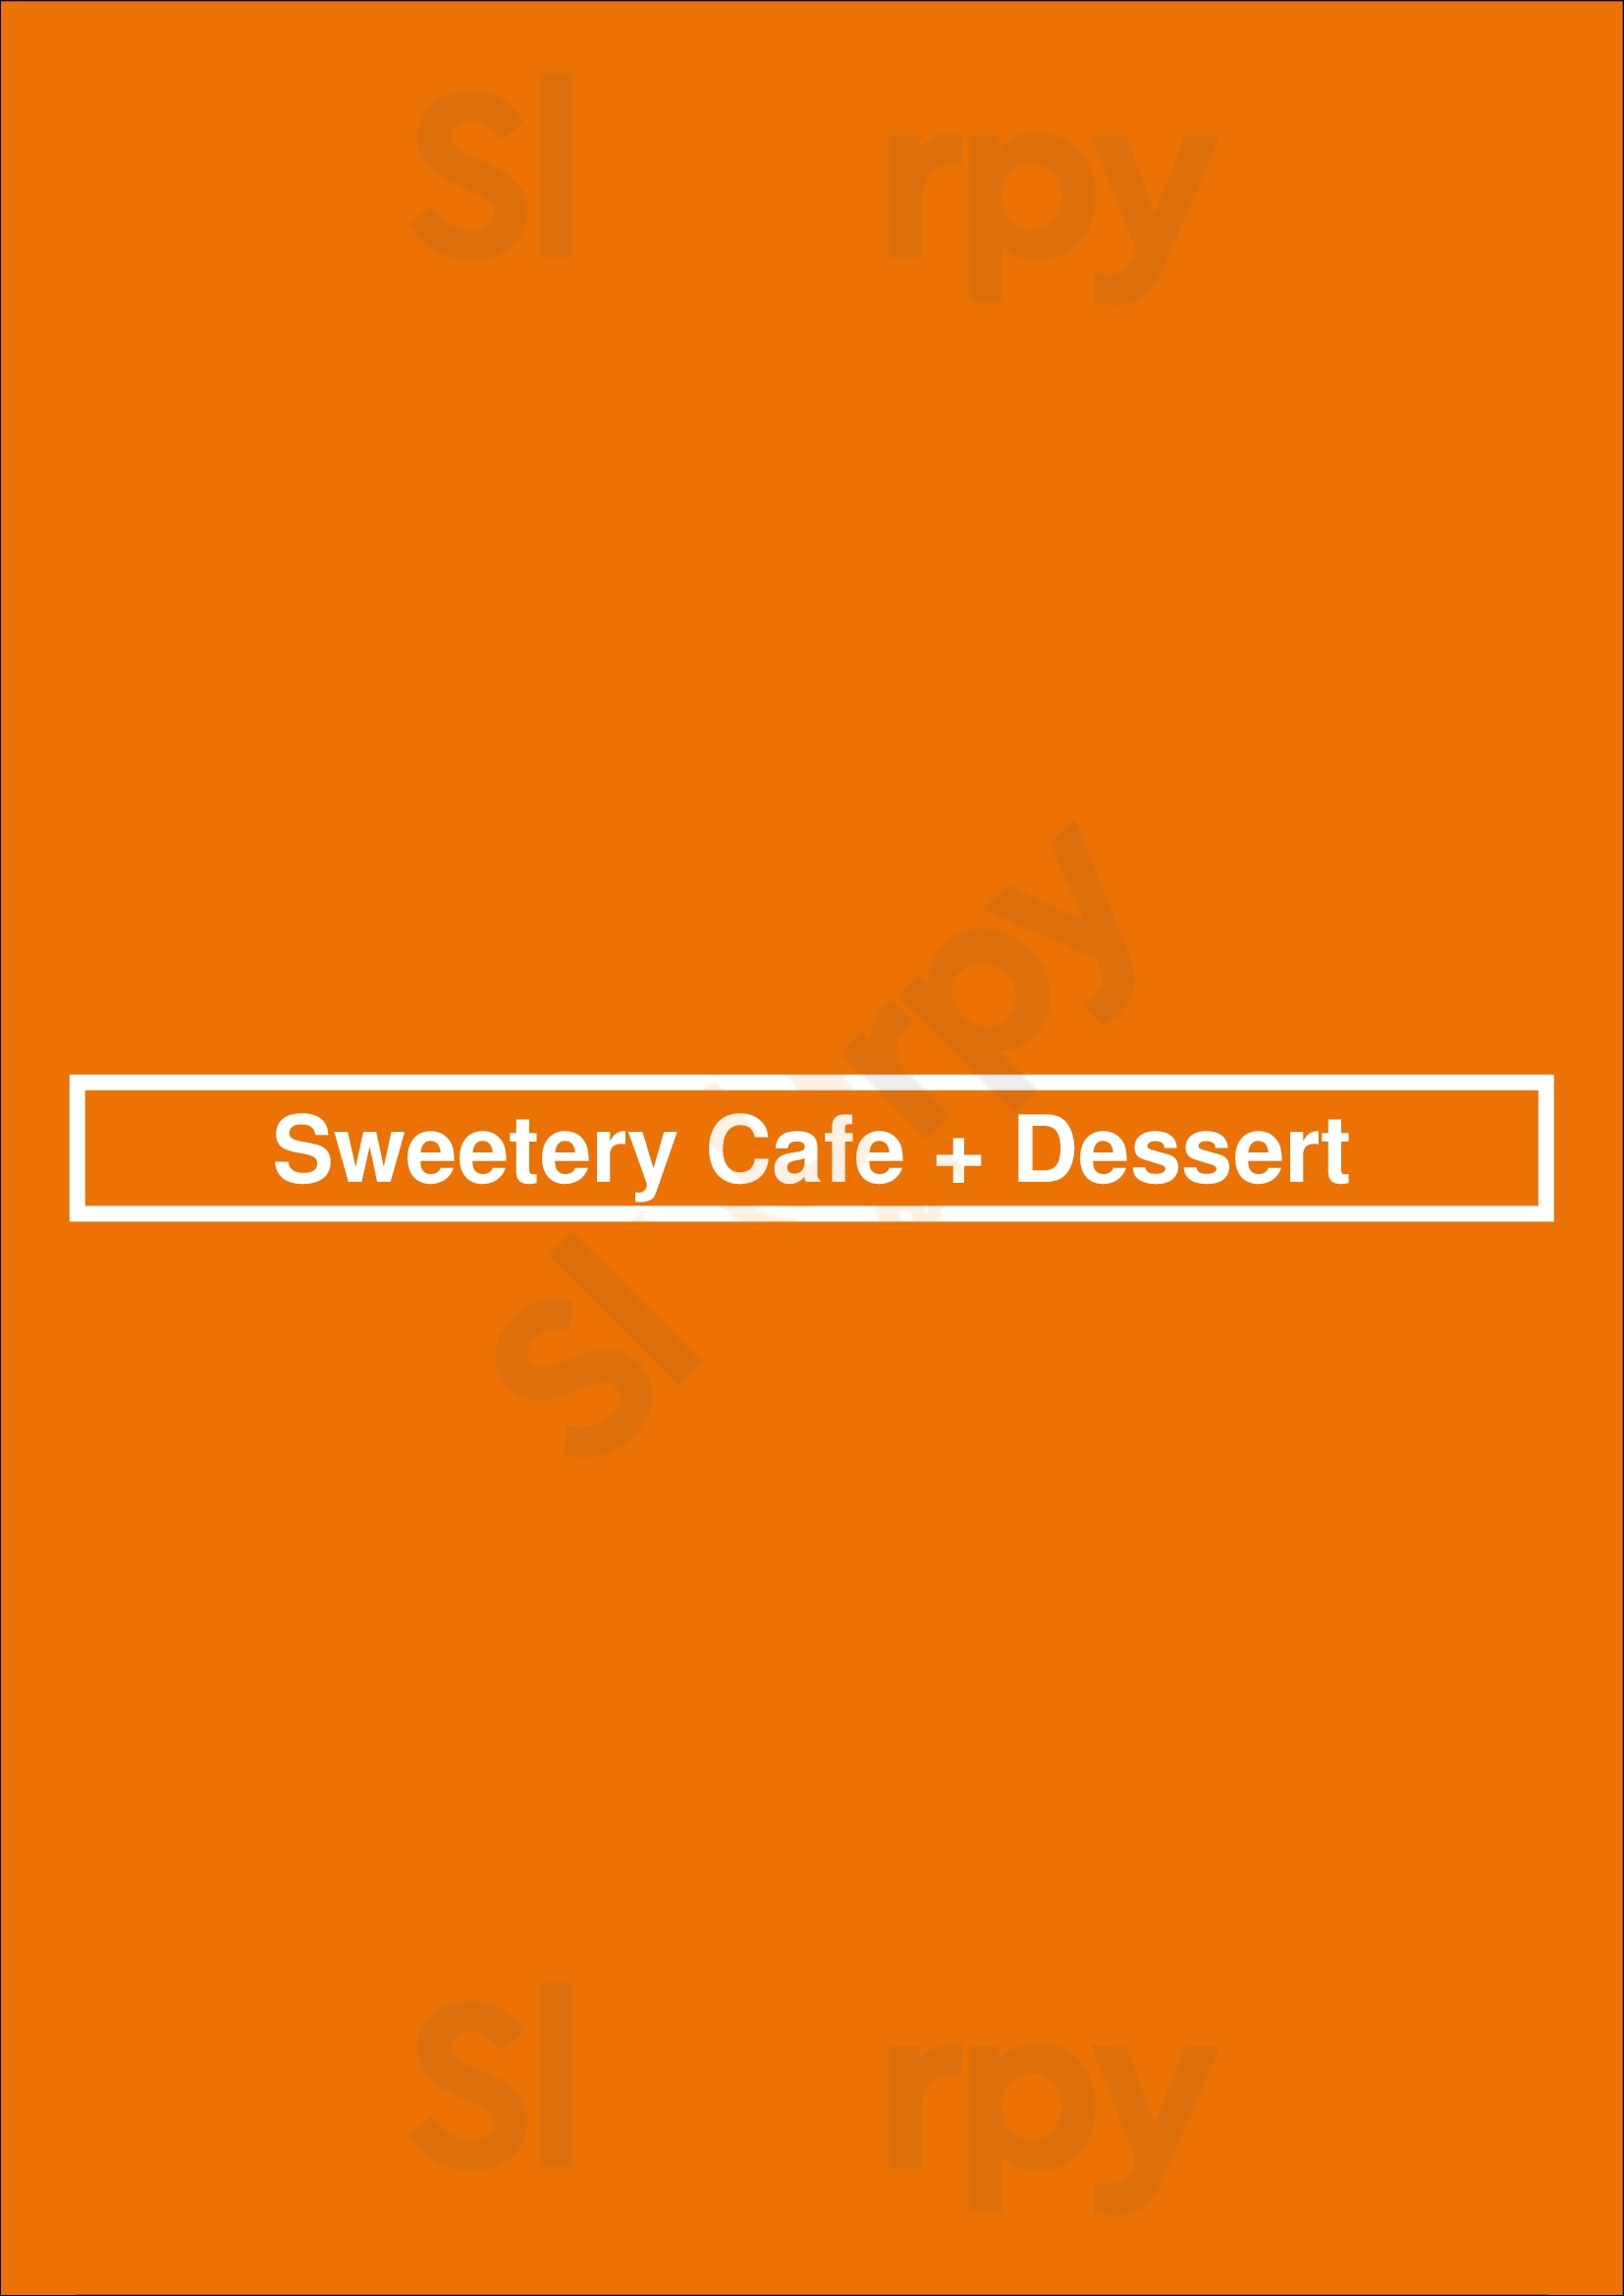 Sweetery Cafe + Dessert Vancouver Menu - 1